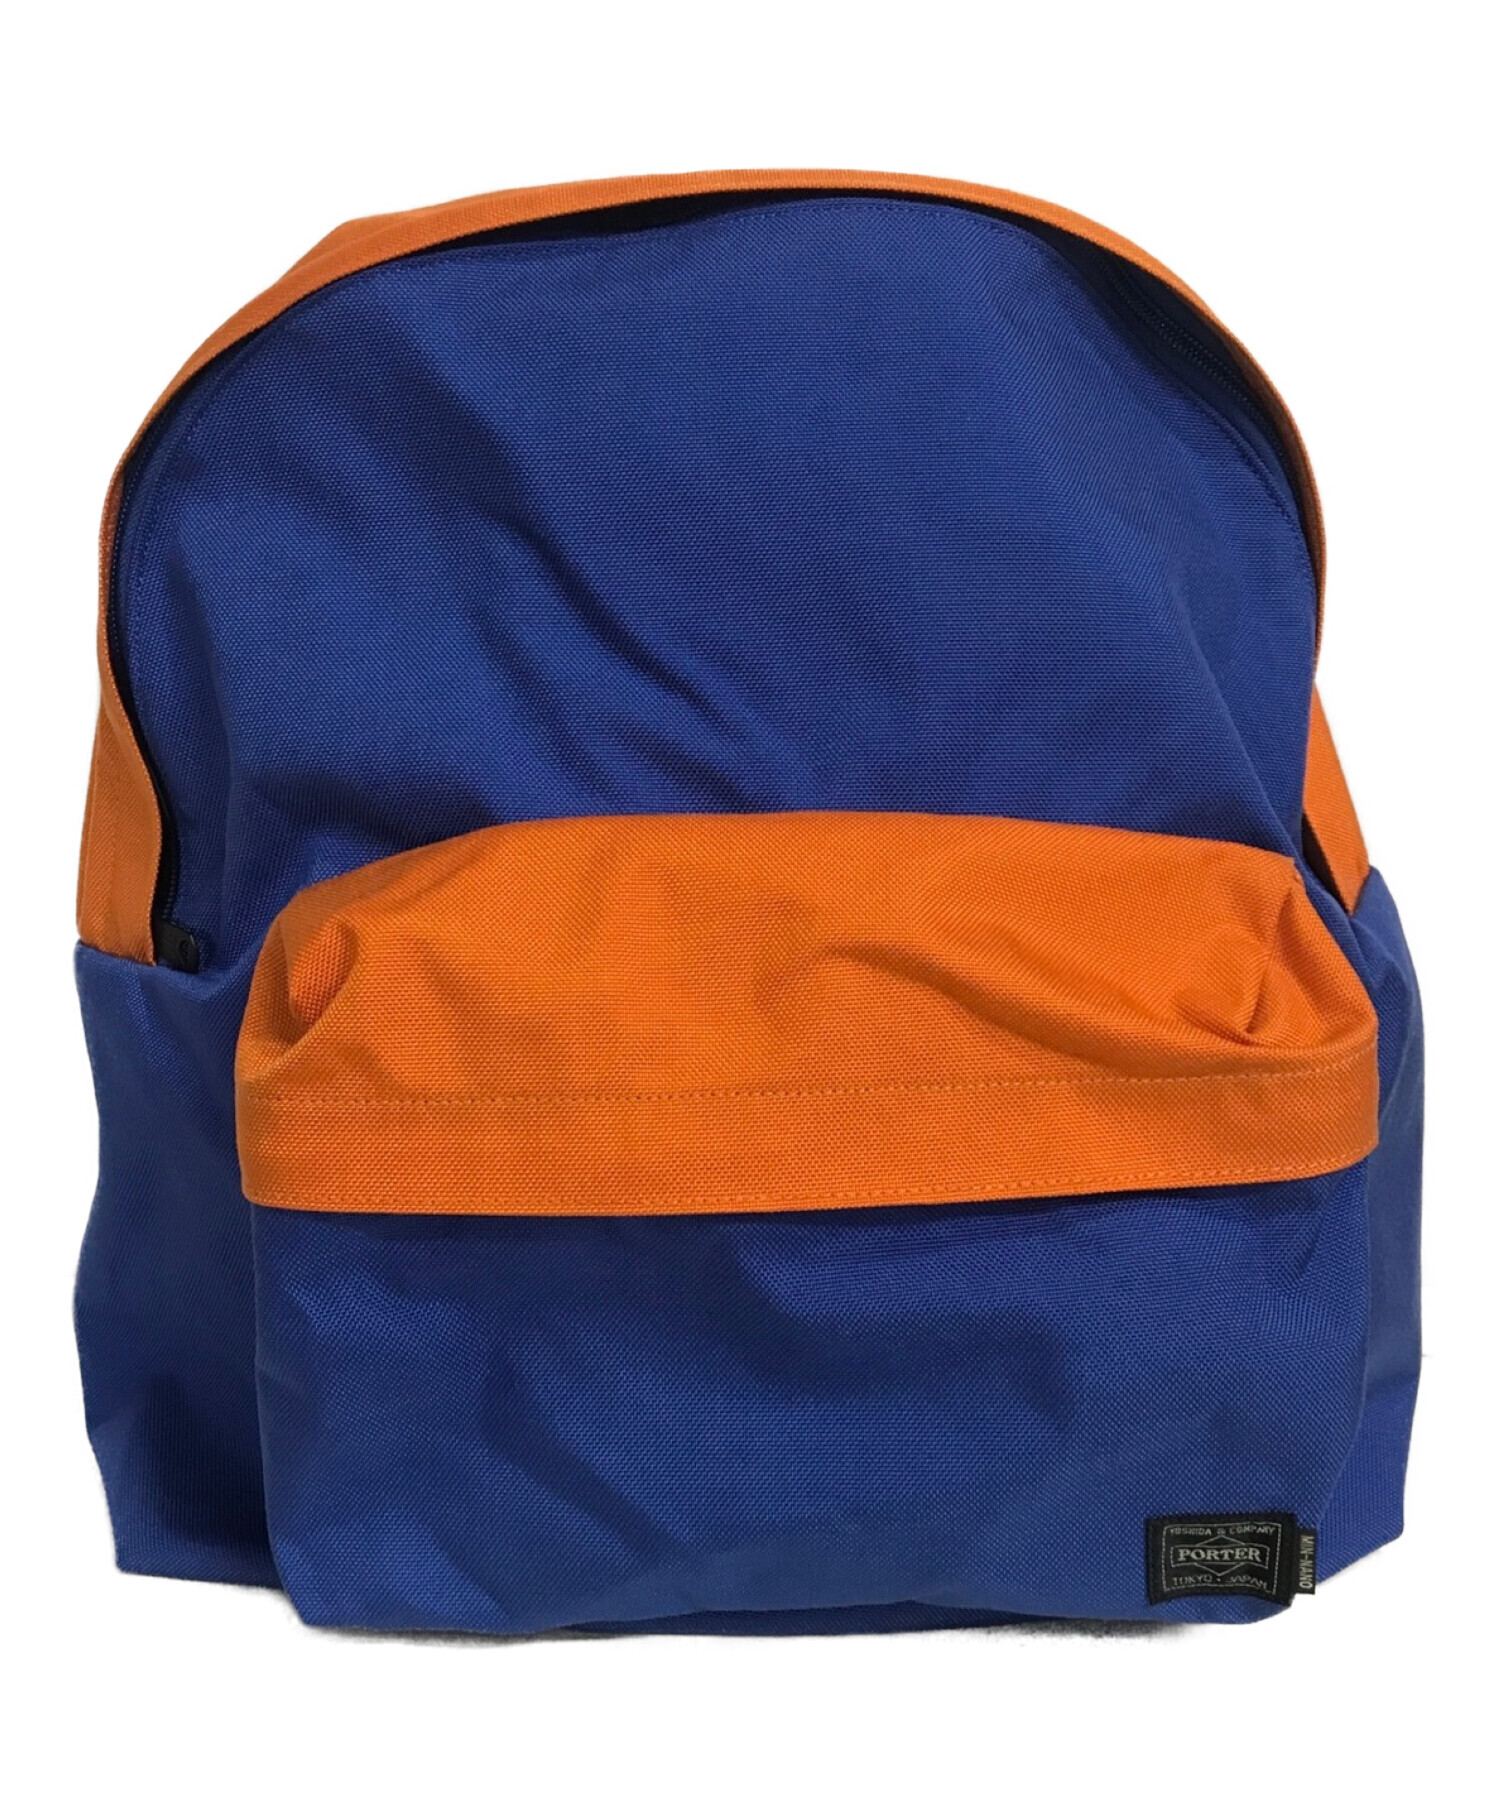 PORTER (ポーター) min-nano (ミンナノ) バイカラーバックパック ブルー×オレンジ サイズ:記載なし